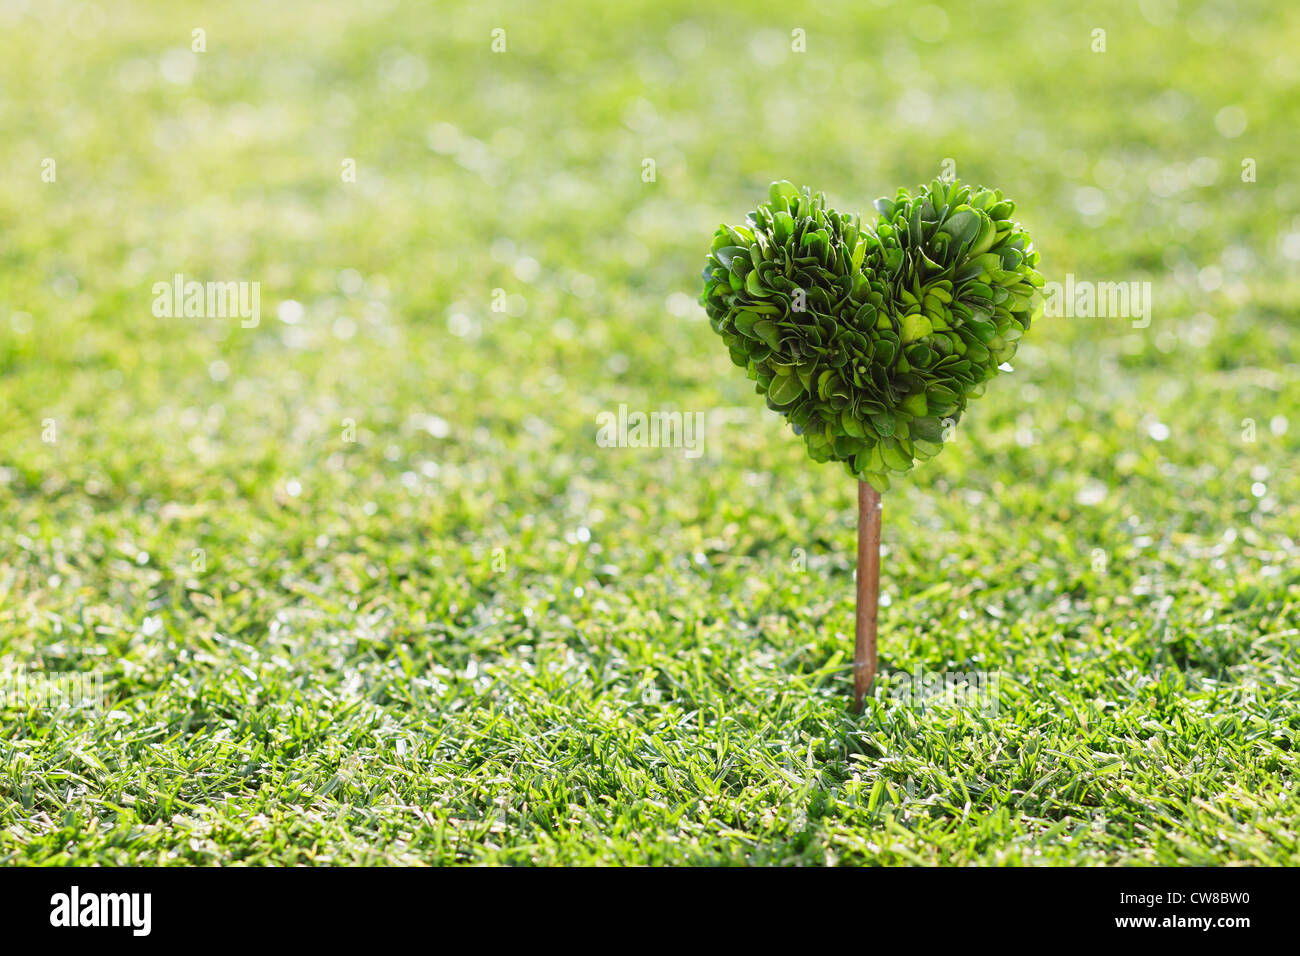 Forme de coeur Tree In Grassy Field Banque D'Images